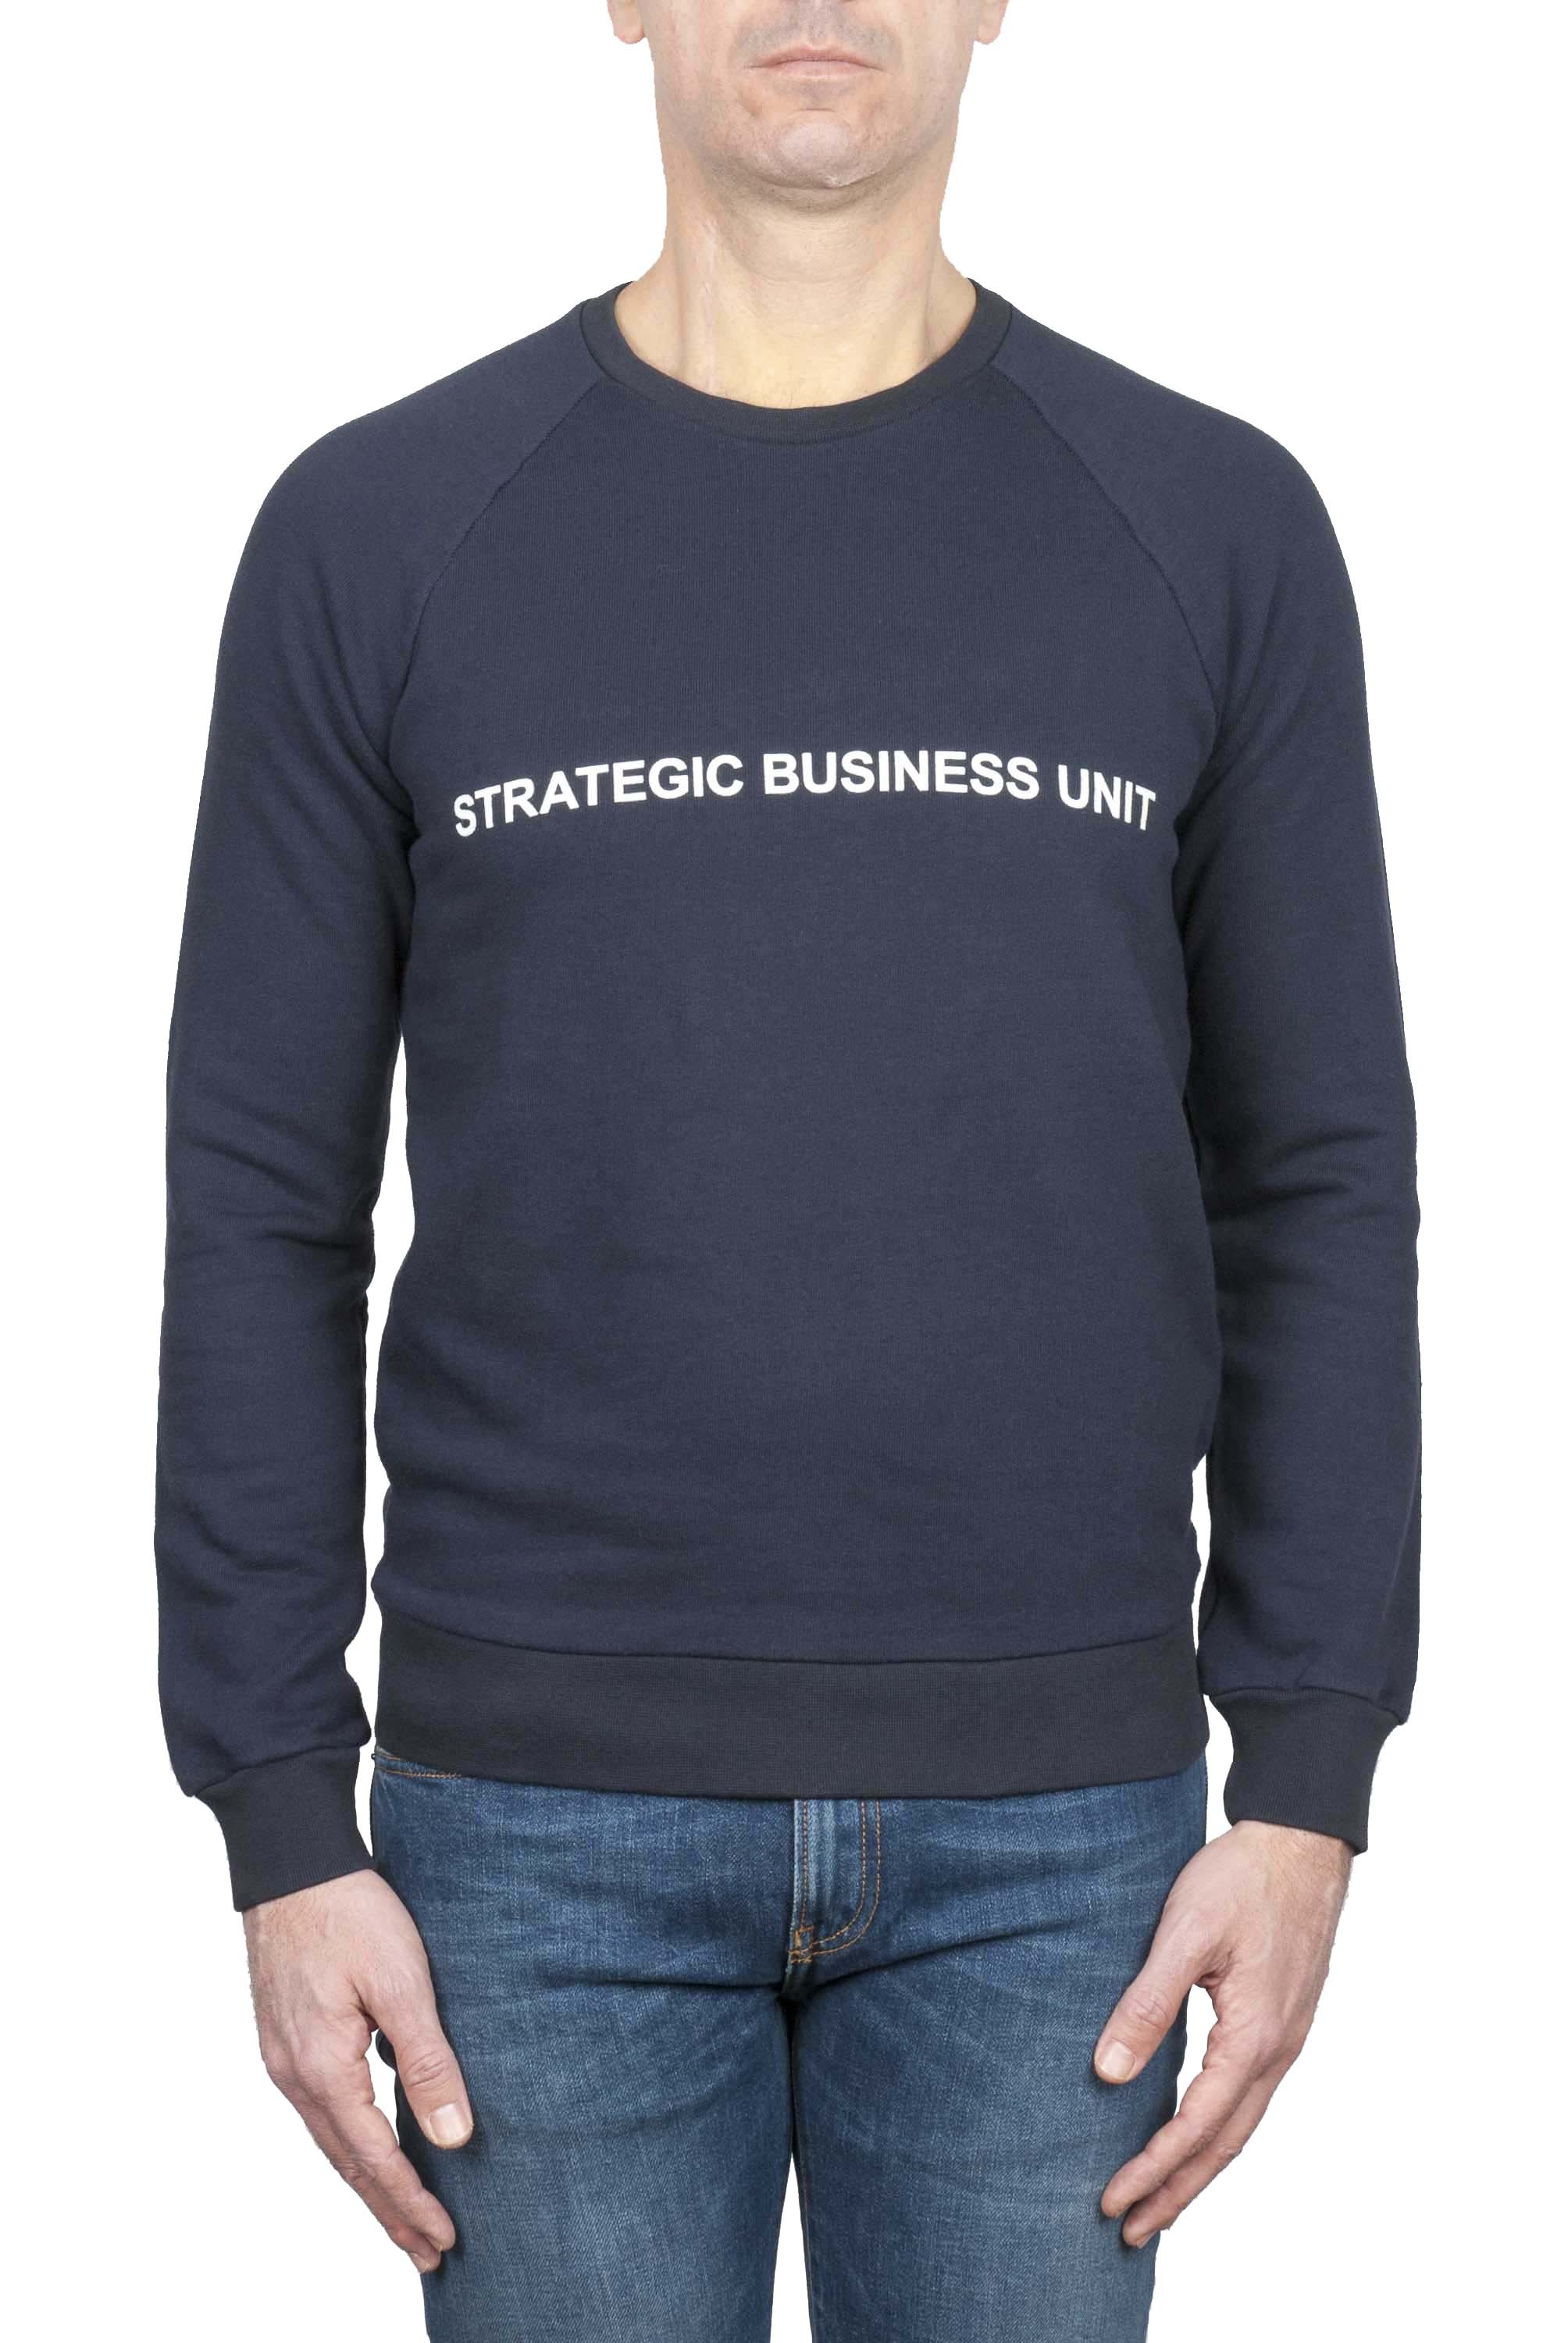 SBU 01466_2021SS Strategic Business Unitロゴプリントクルーネックスウェットシャツ 01